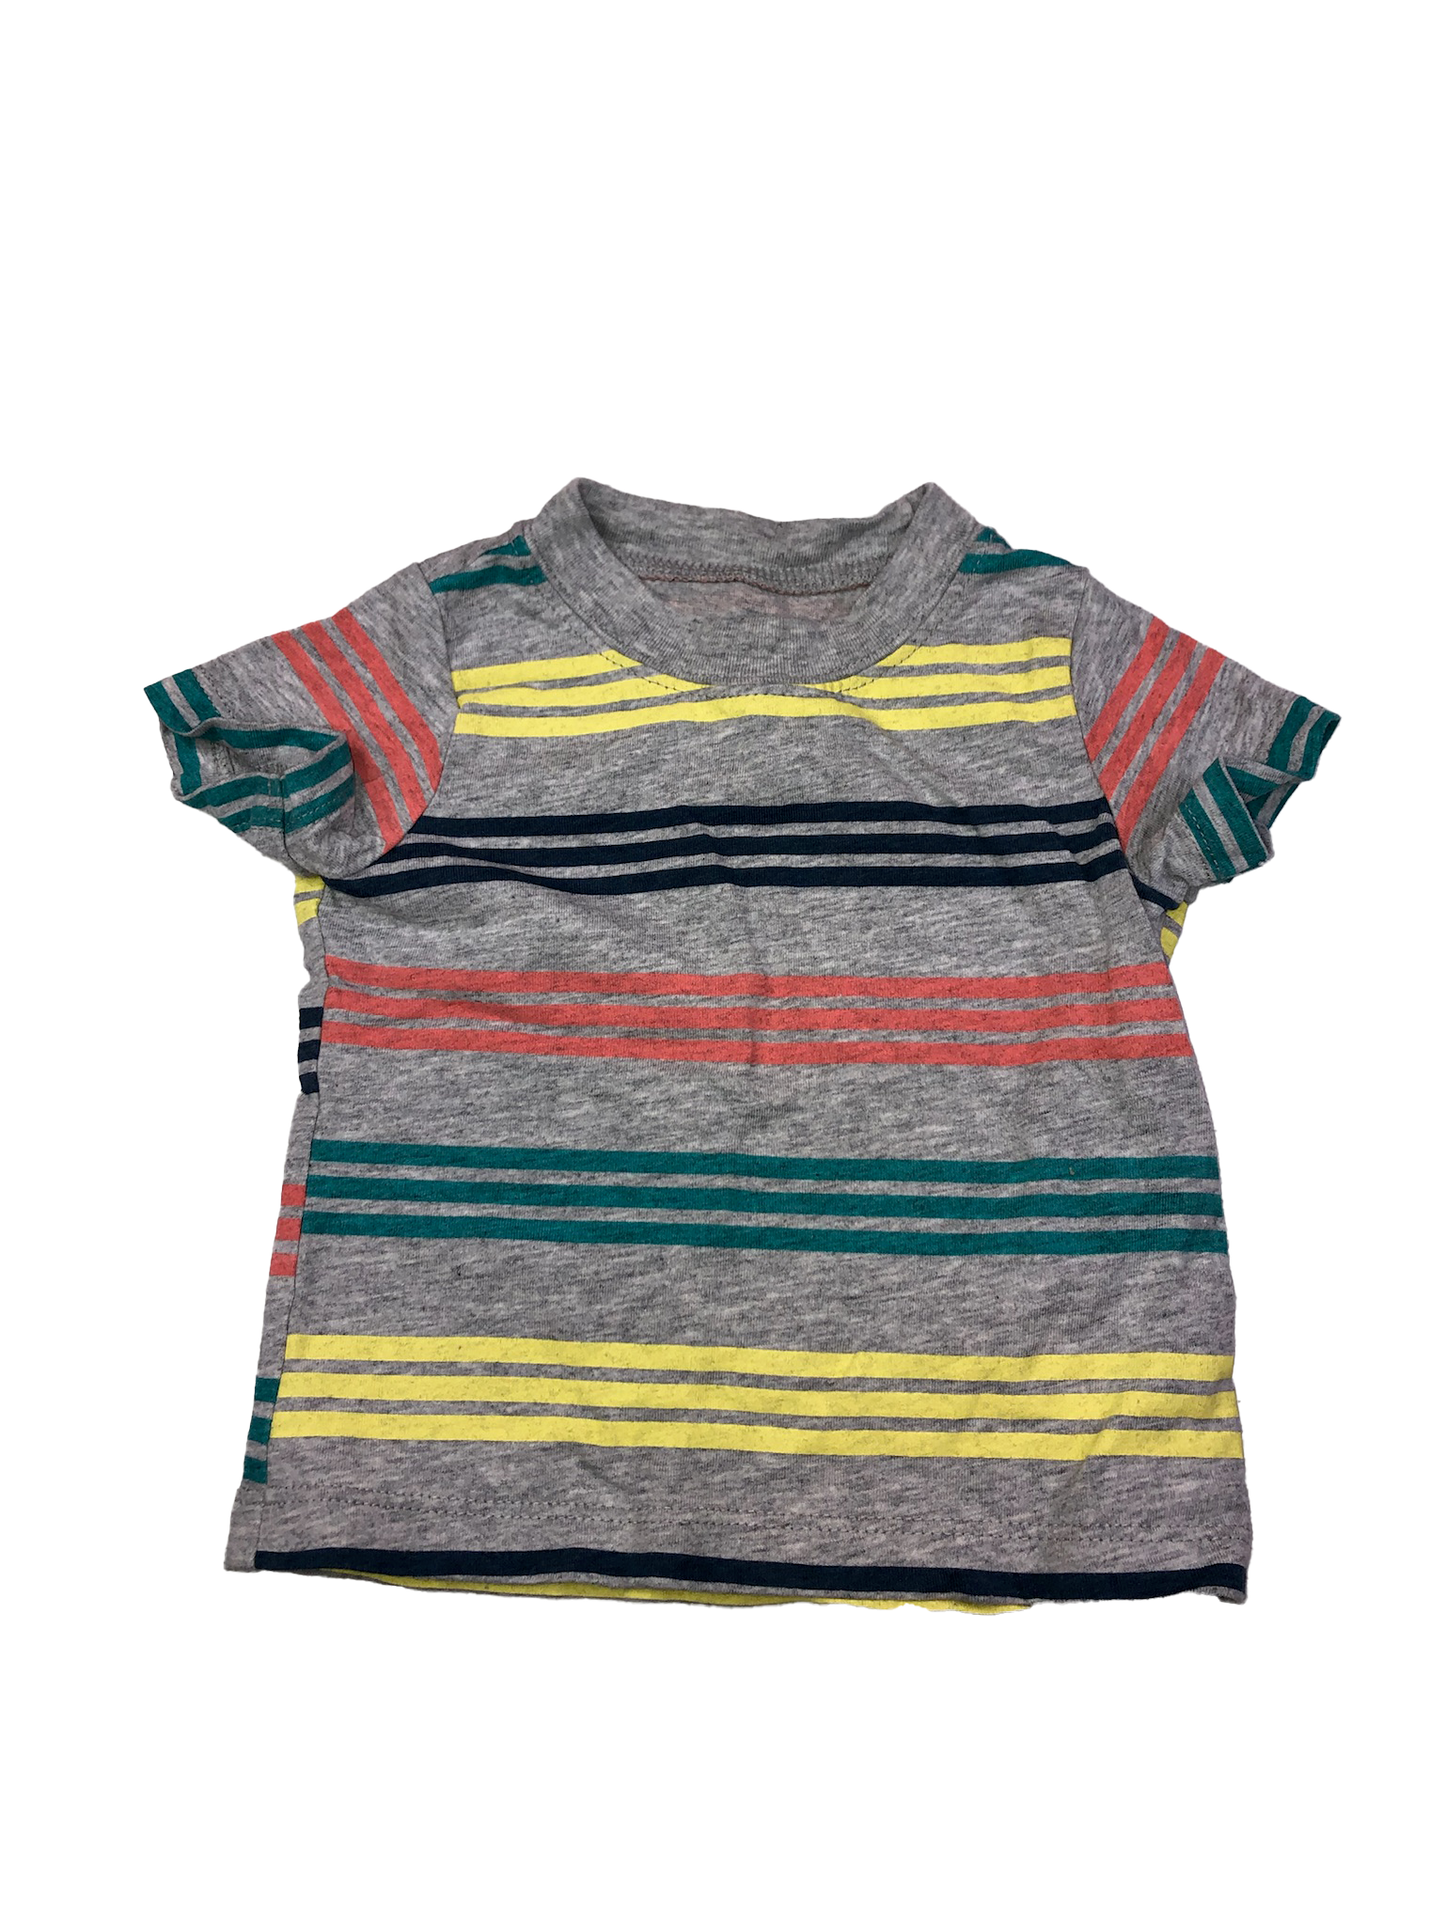 Carter's Grey Striped T-Shirt 9M